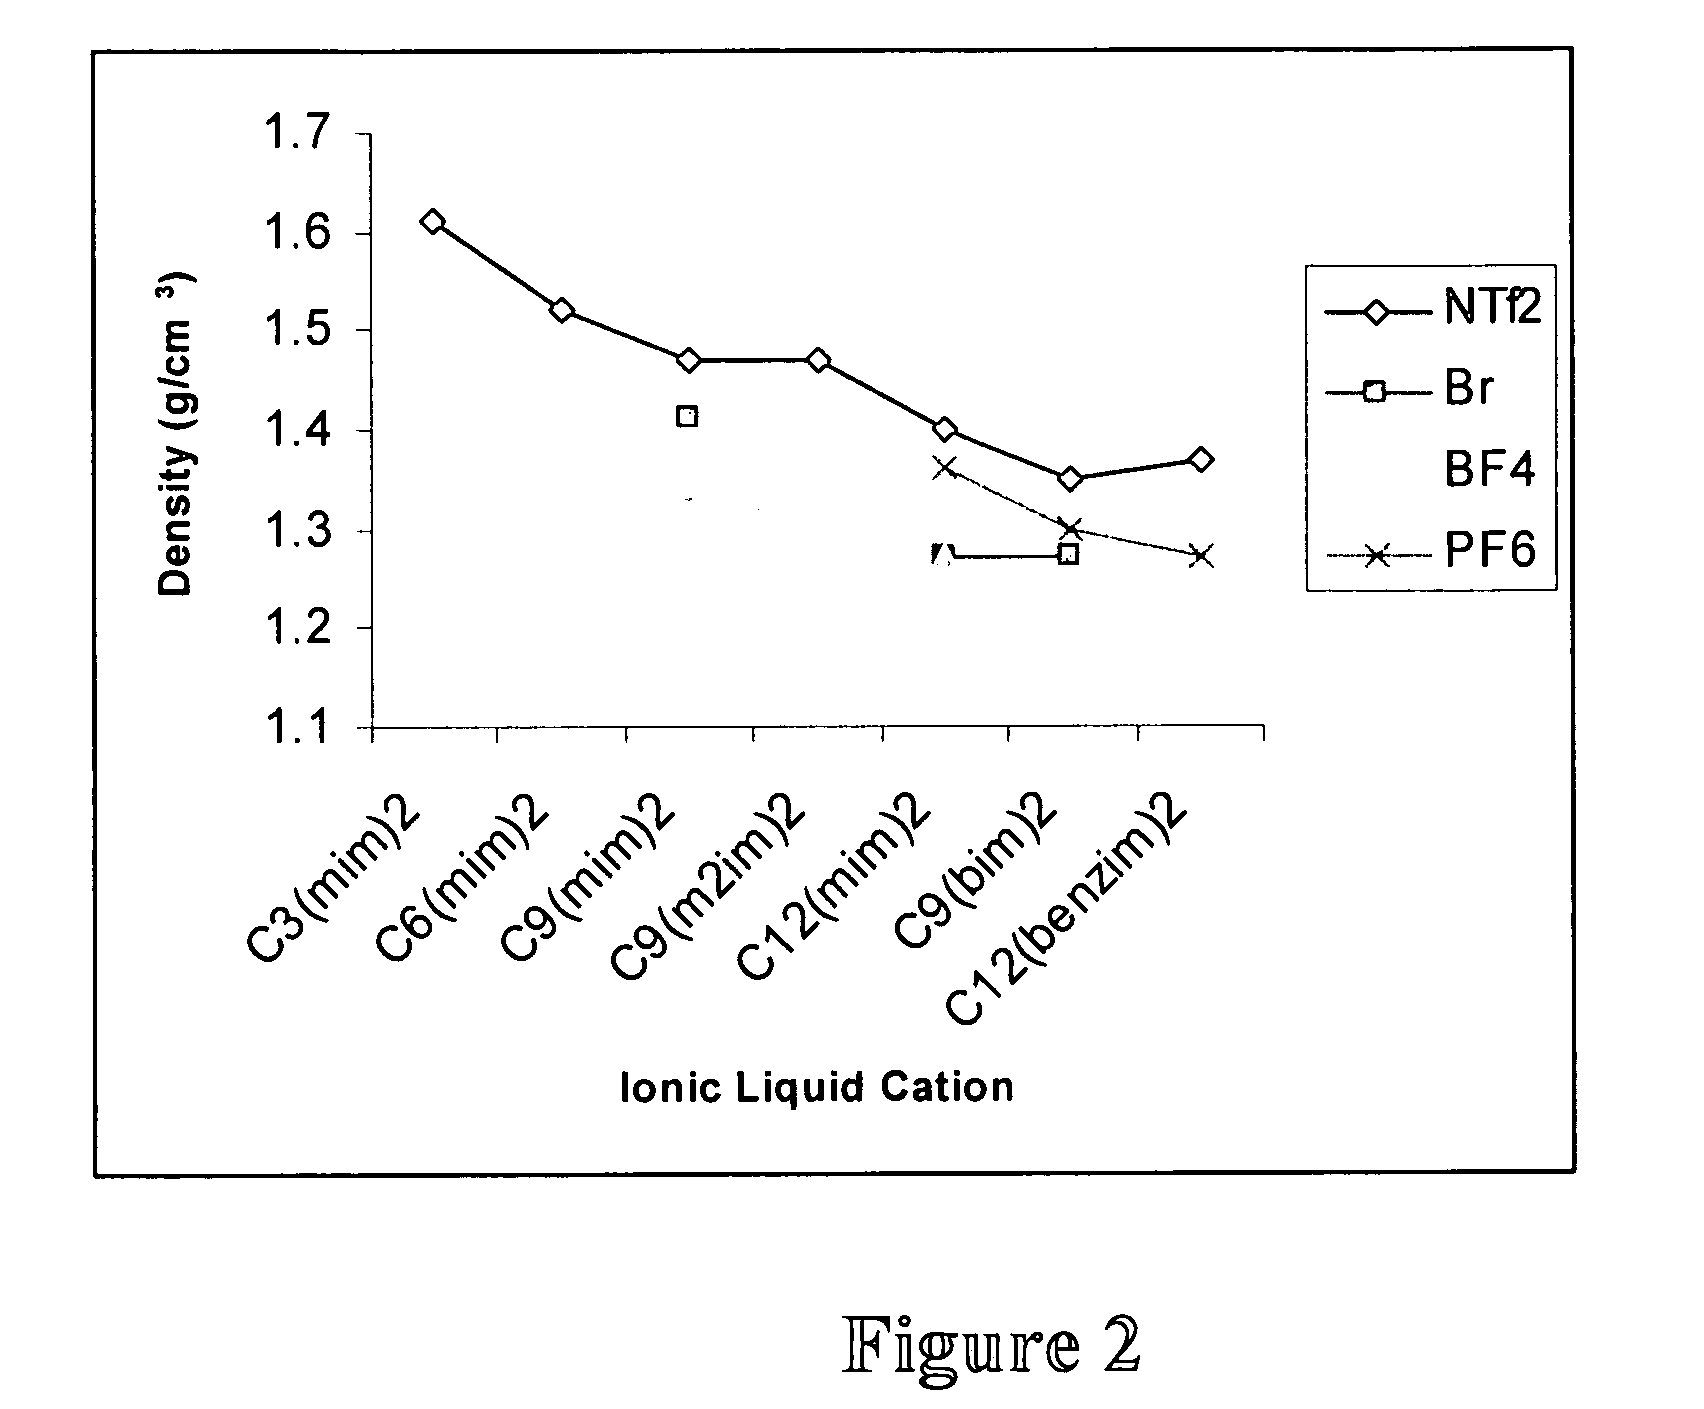 High stability diionic liquid salts